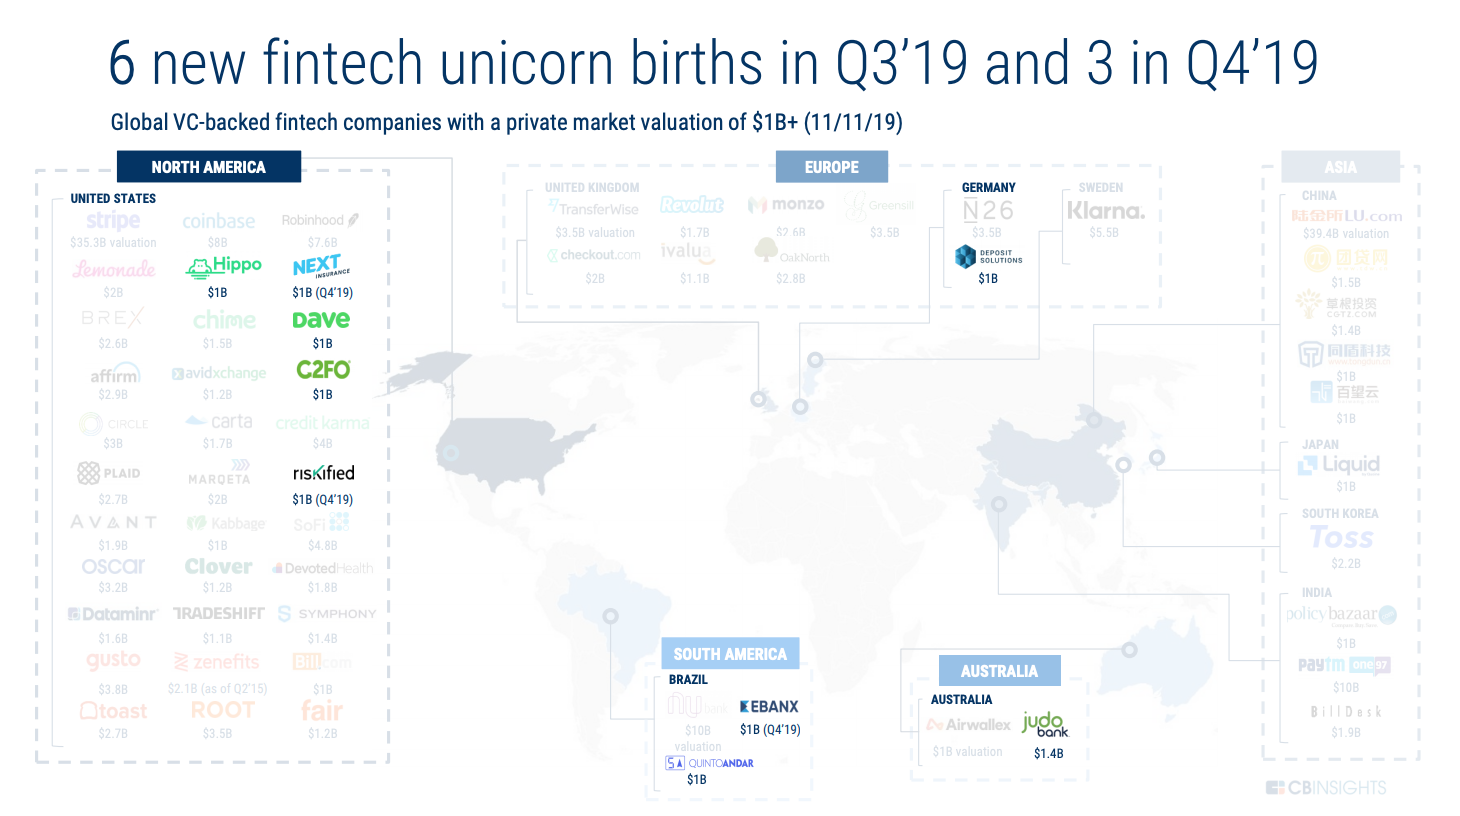 6 new fintech unicorn births in Q3’19 and 3 in Q4’19, Global Fintech Report Q3 2019, CB Insights, November 2019